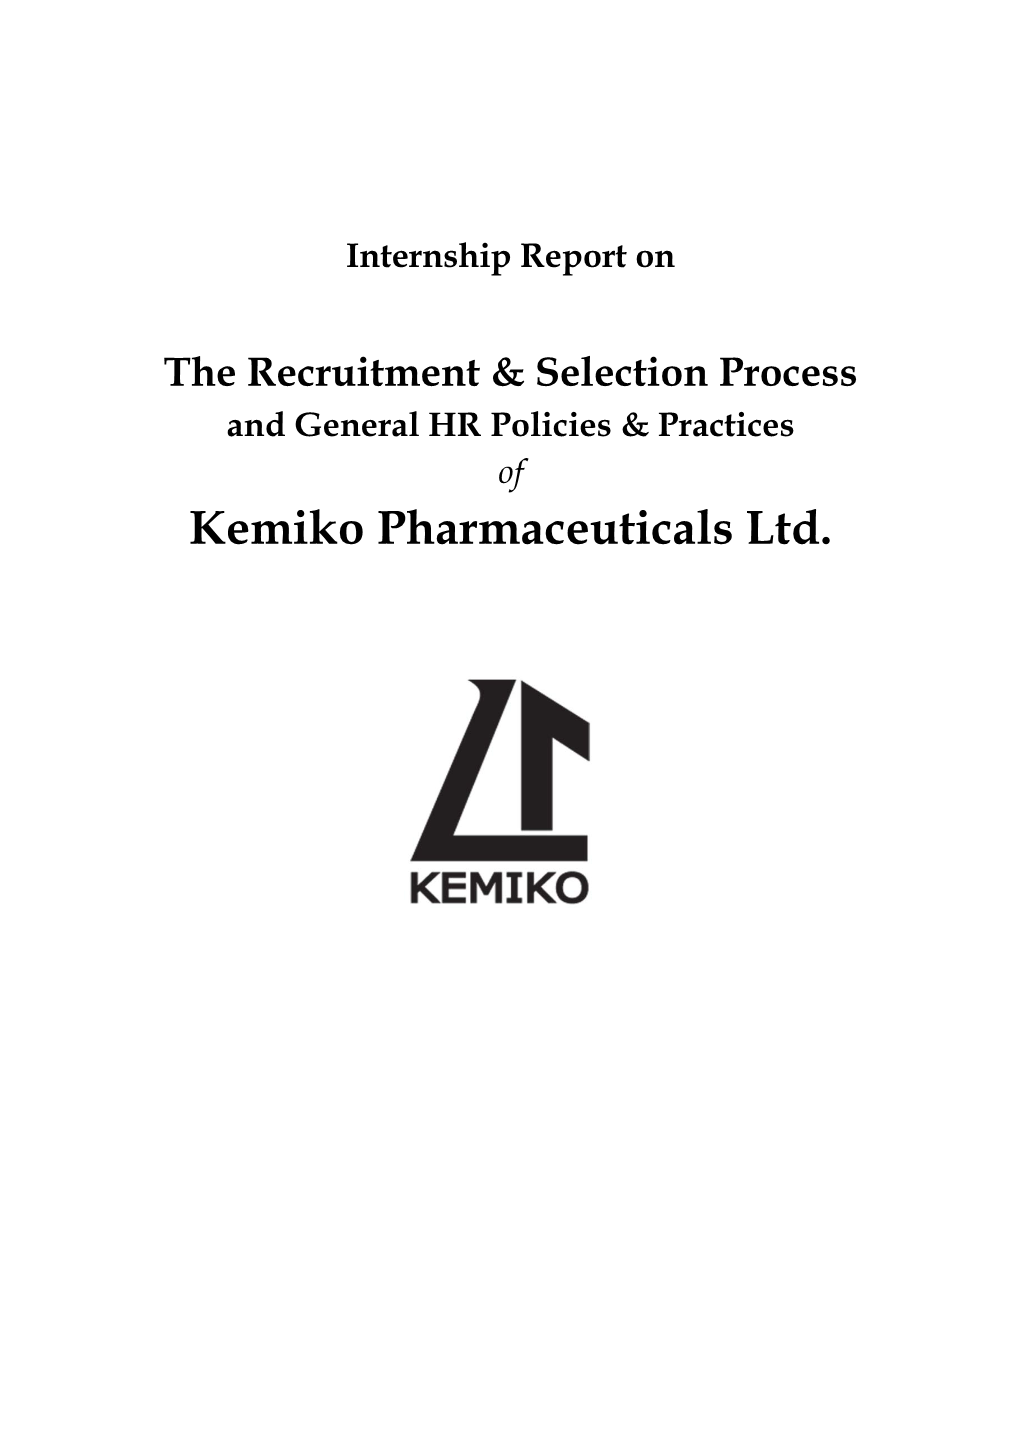 Introduction of Kemiko Pharmaceuticals Ltd